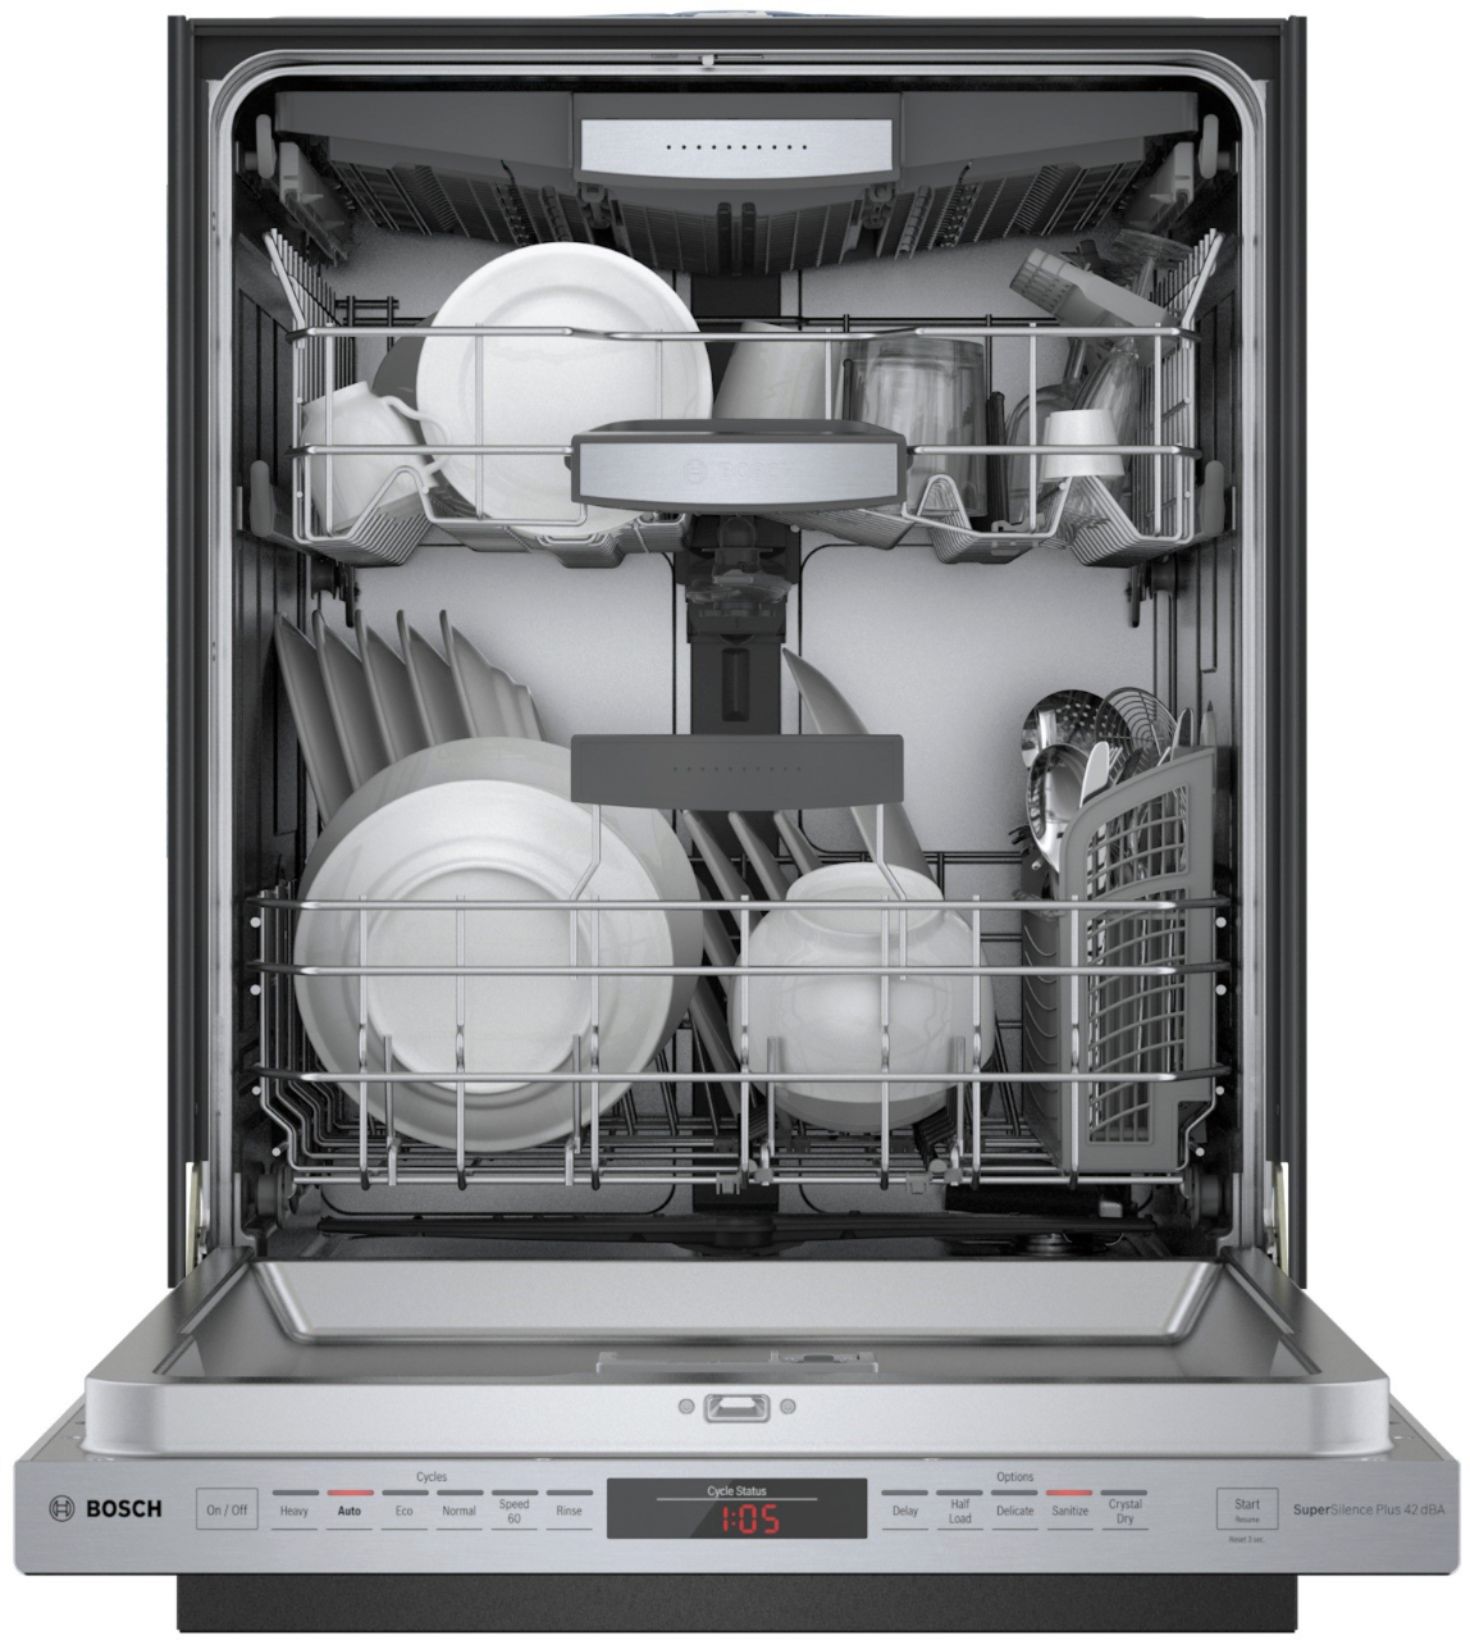 best buy bosch dishwasher 500